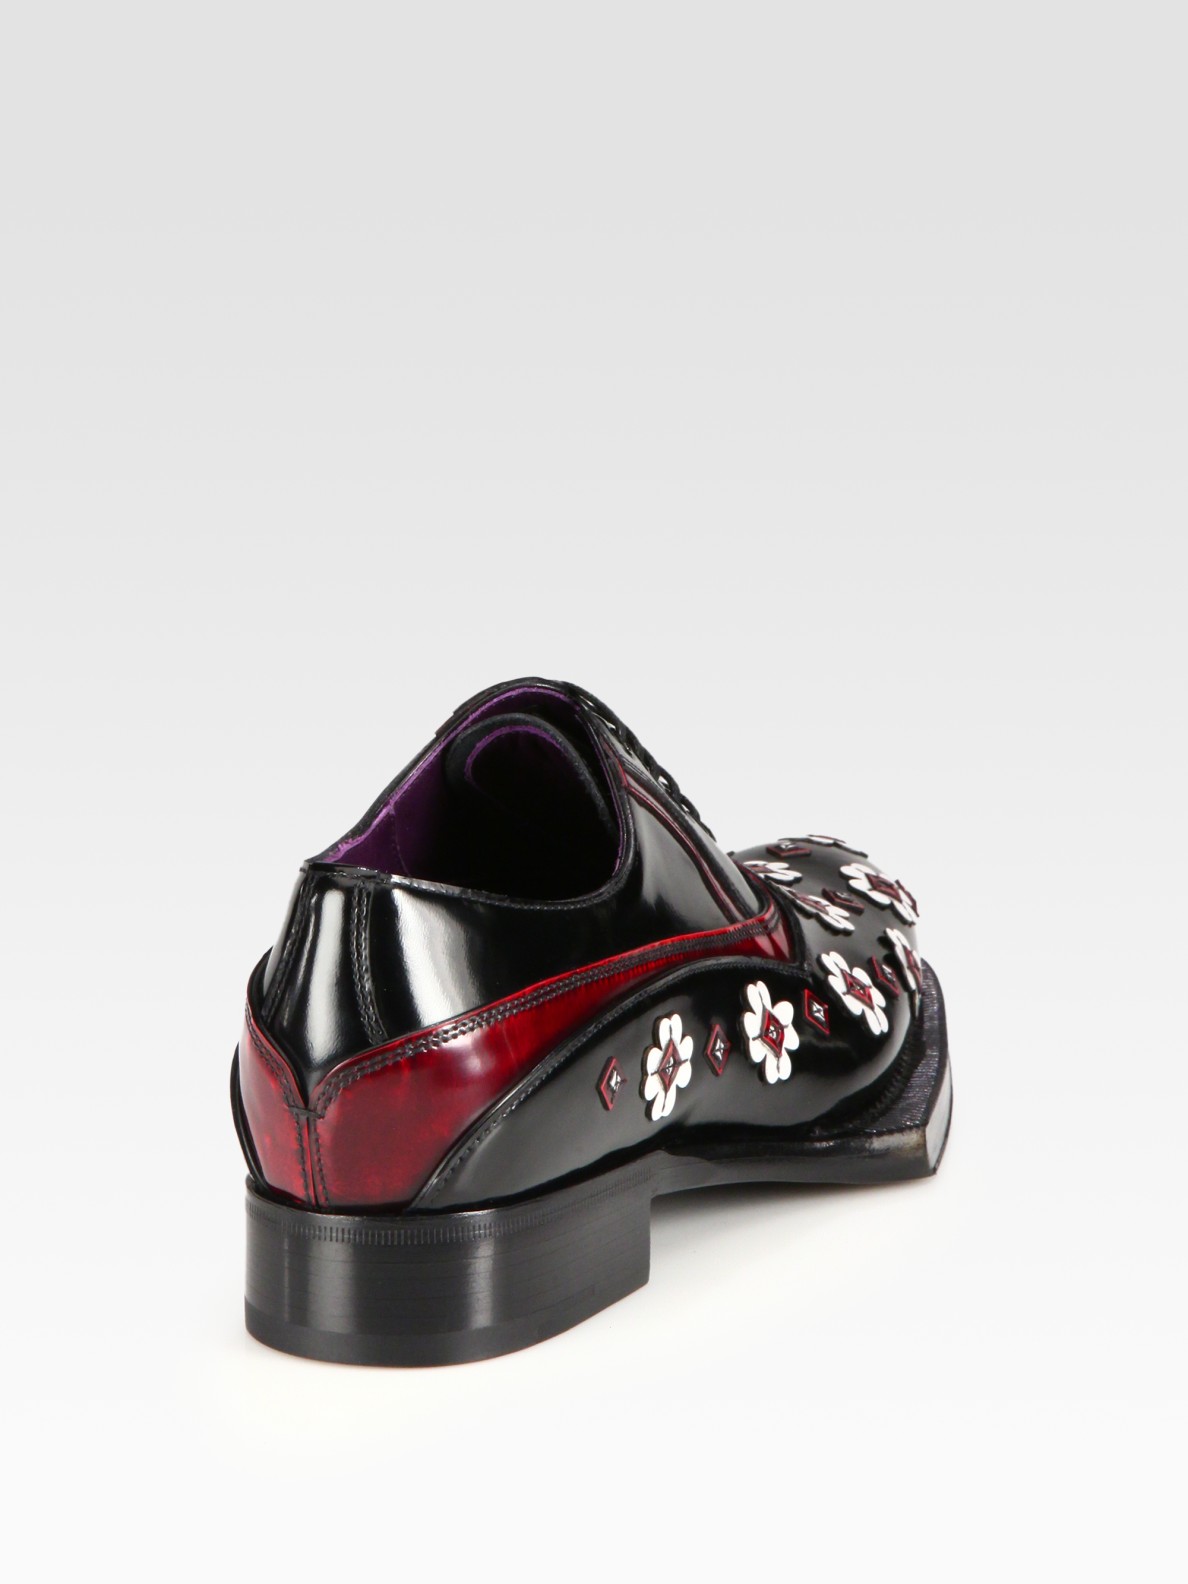 Prada Leather Flower Loafers in Black | Lyst